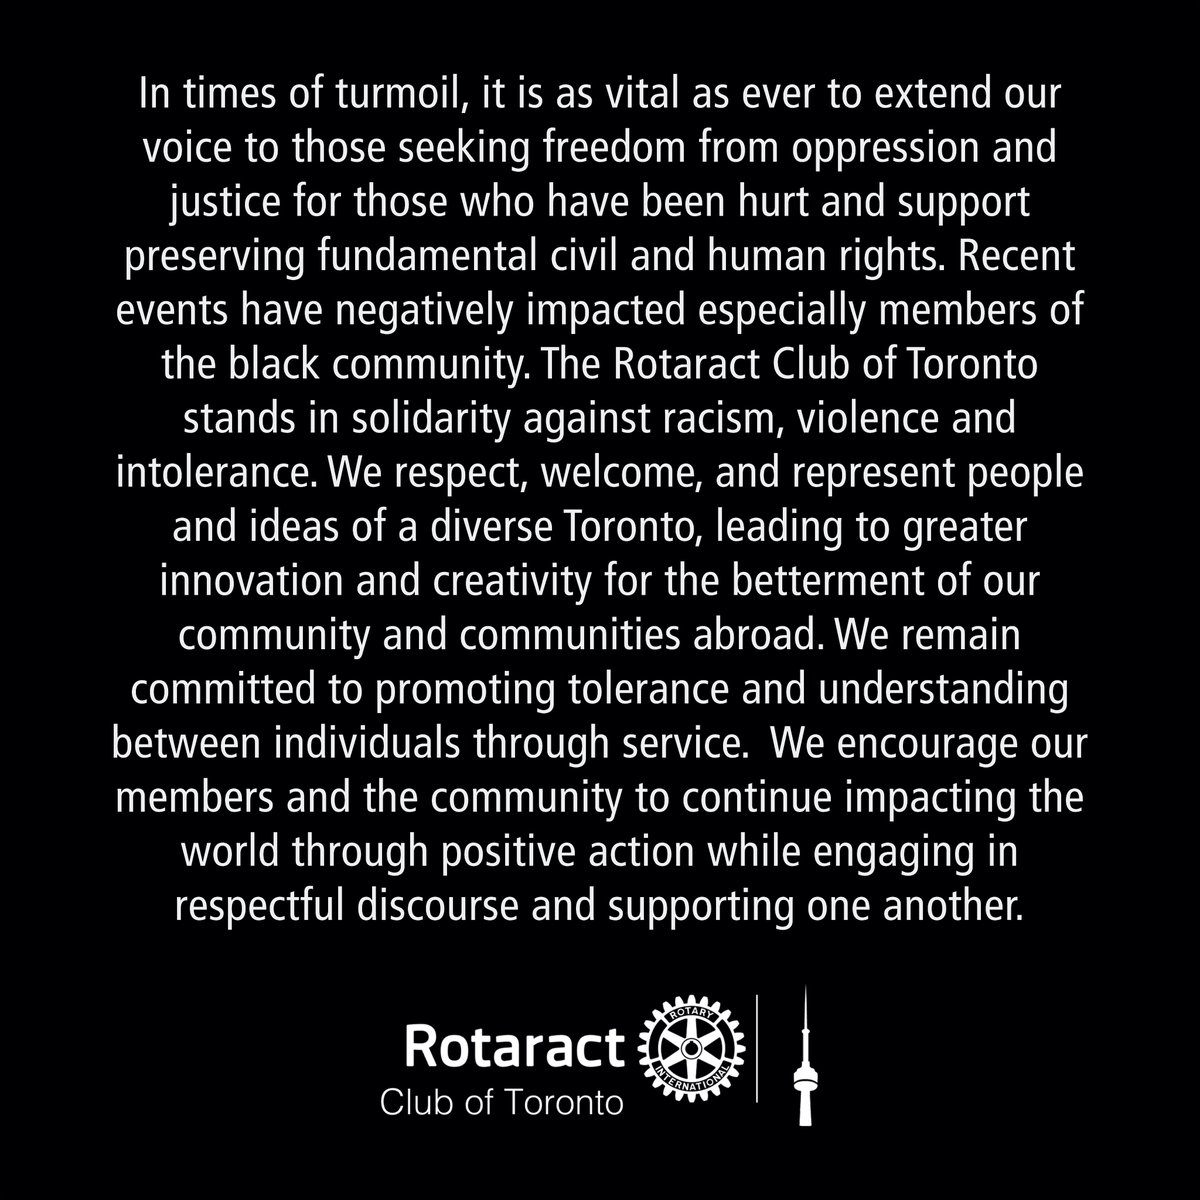 Rotaract Club of Toronto (@RotaractTO) on Twitter photo 2020-06-01 23:55:31